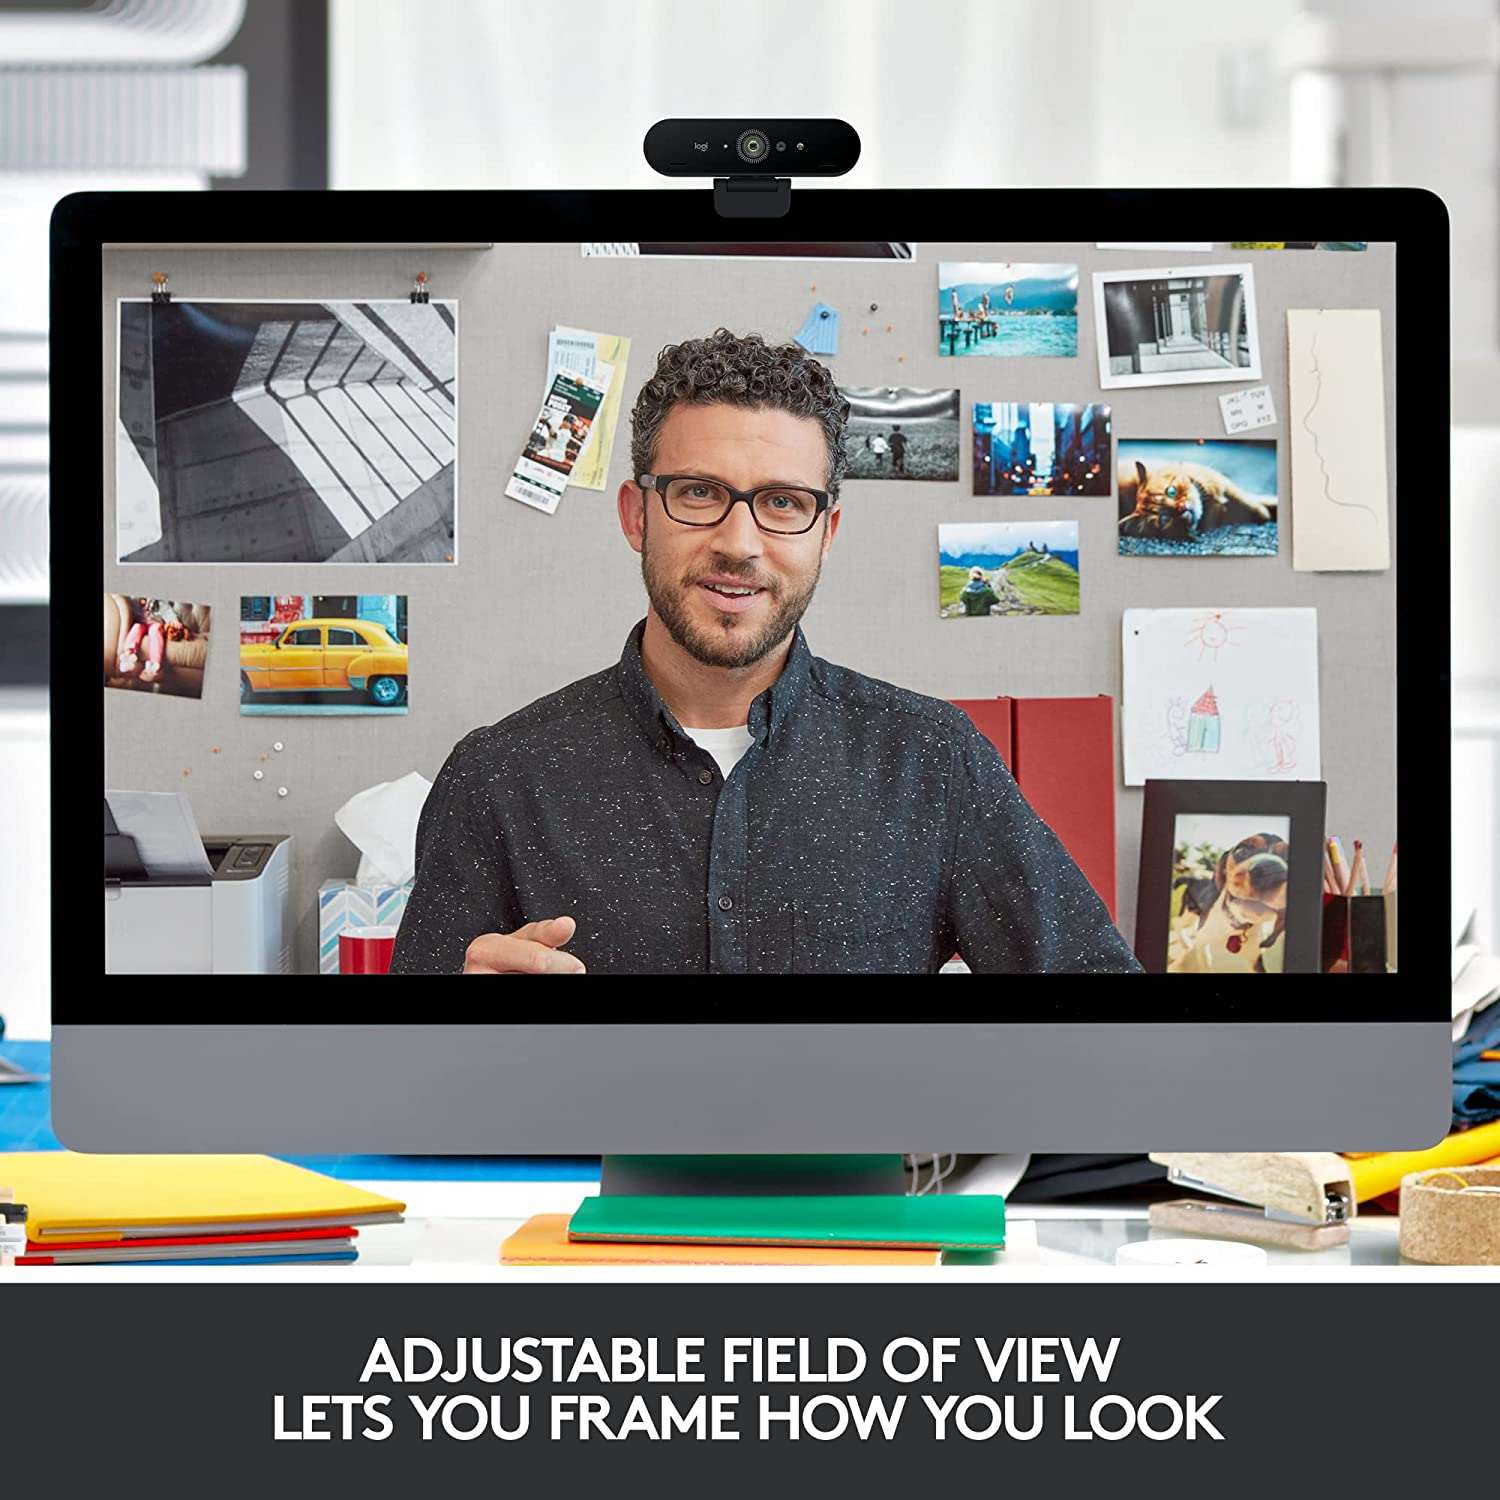 Logitech BRIO – Ultra HD Webcam for Video Conferencing - Veloreo